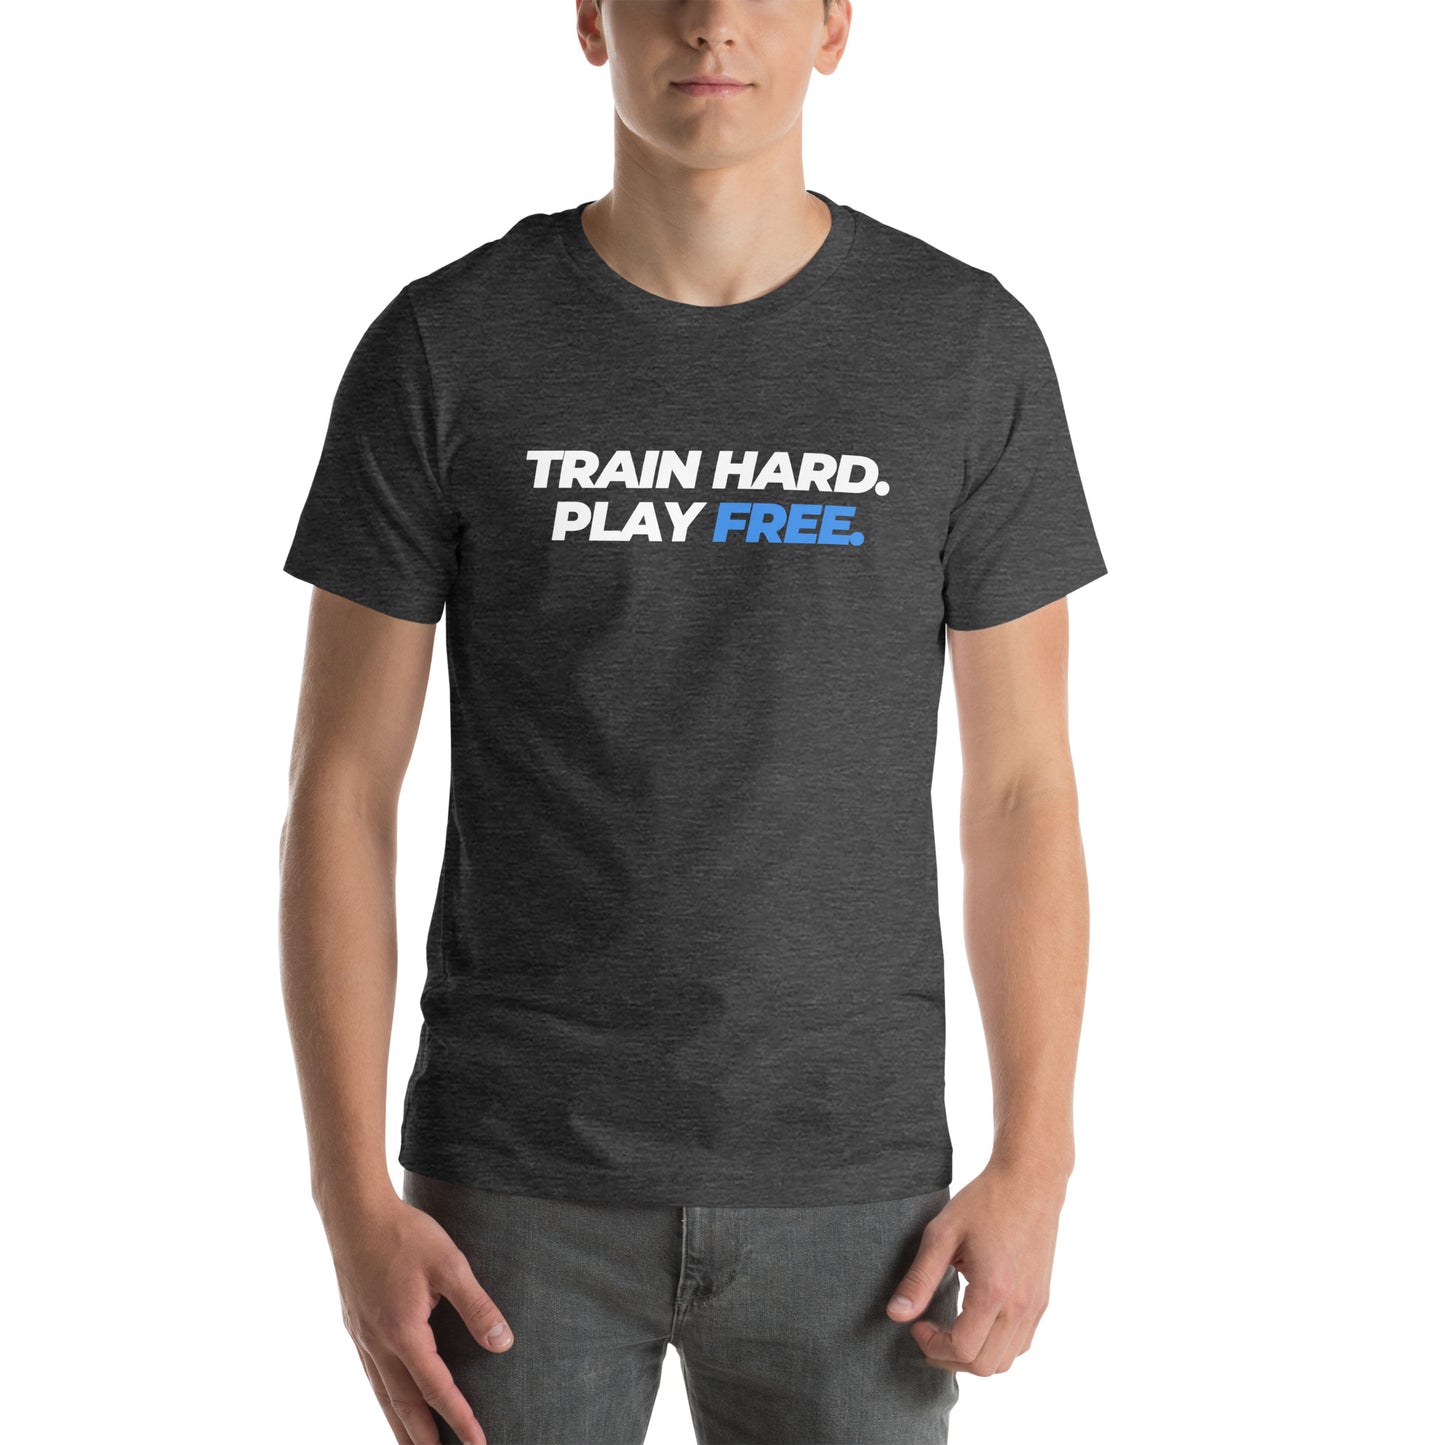 Train Hard. Play Free. - Unisex T-Shirt